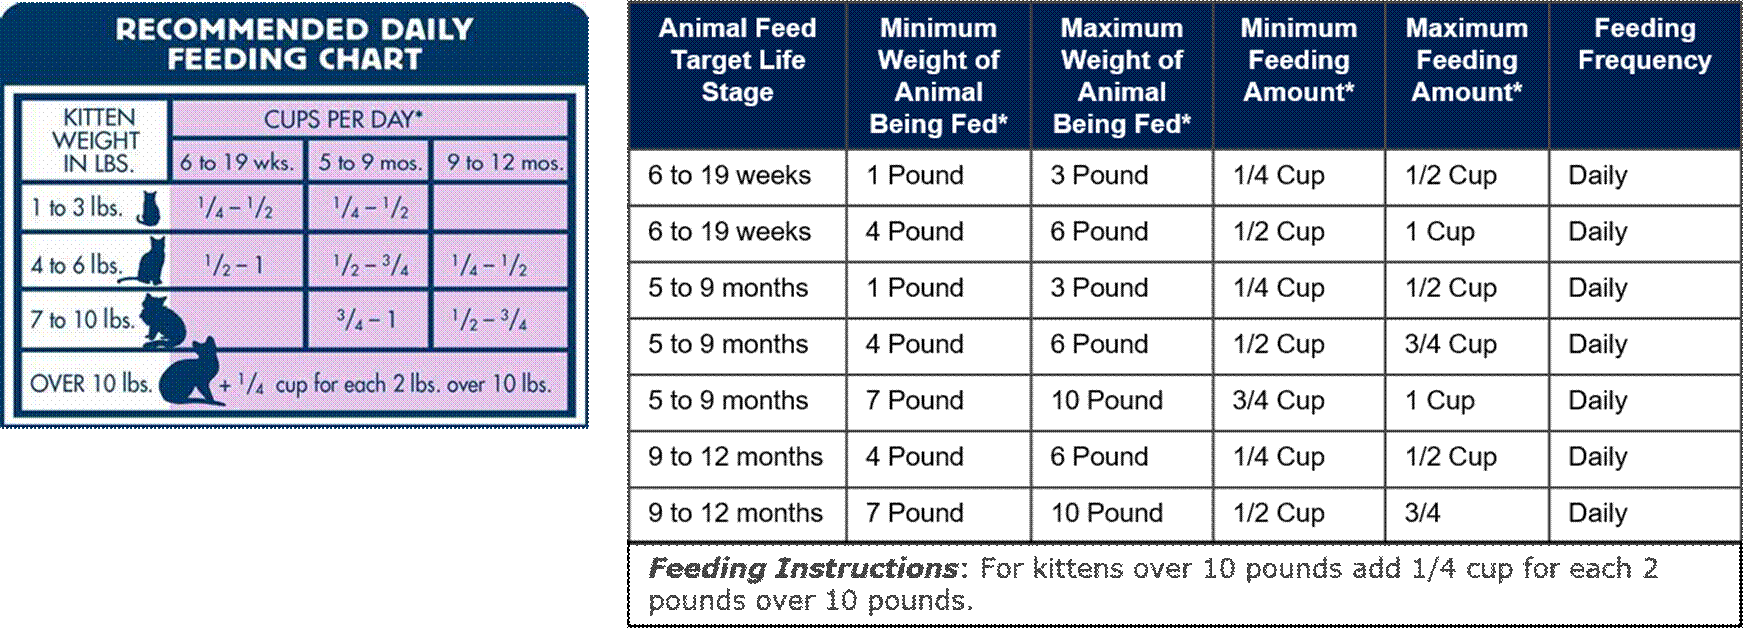 15.4 Pet Food - Image 1